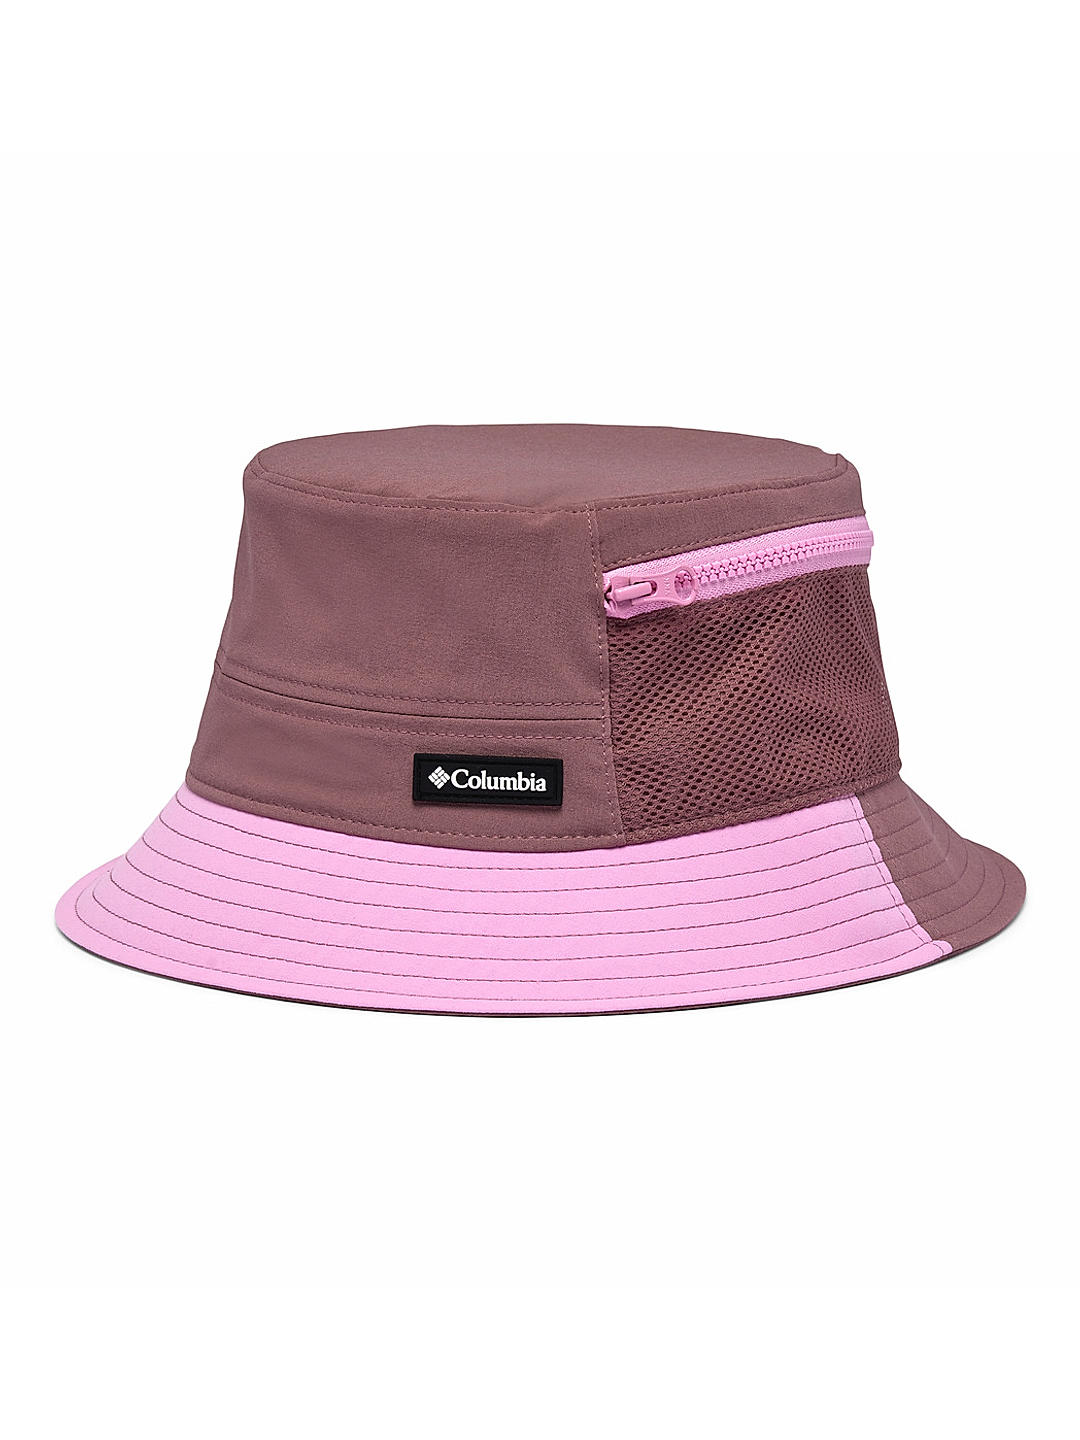 Columbia Unisex Brown Trek Bucket Hat (Sun Protection)